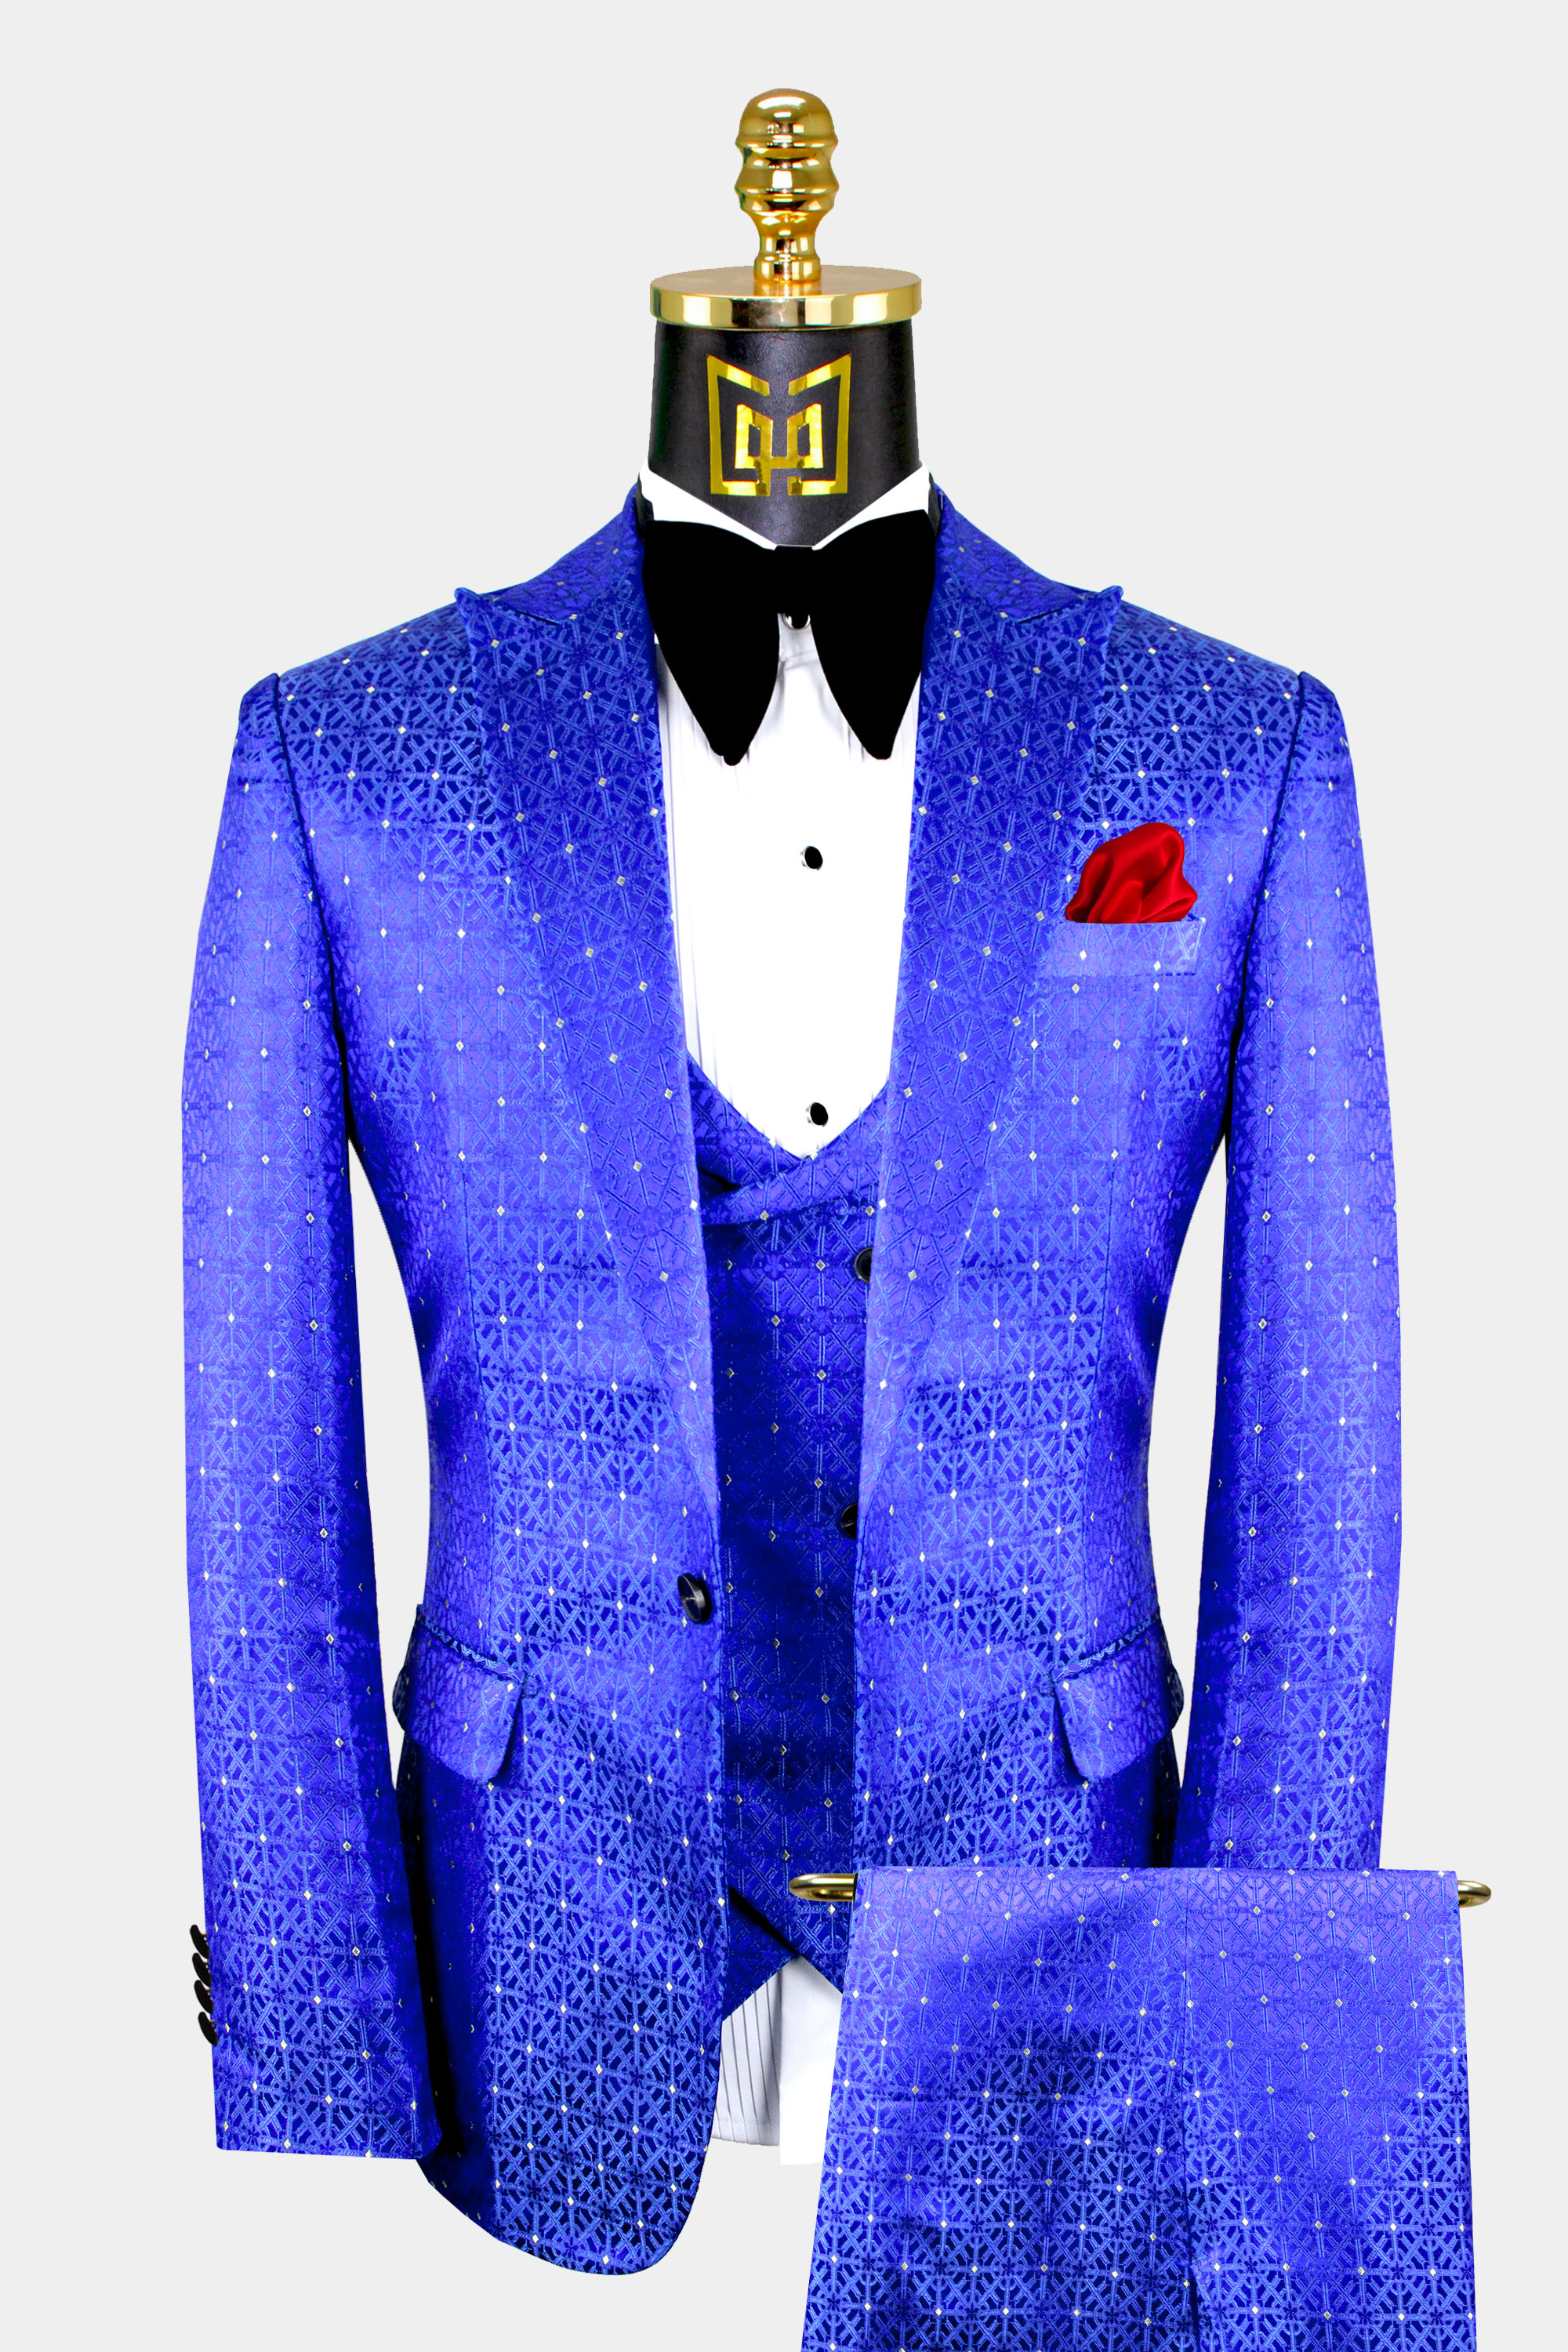 Mens-Bright-Blue-Suit-Wedding-Groom-Prom-Tuxedo-from-Gentlemansguru.com